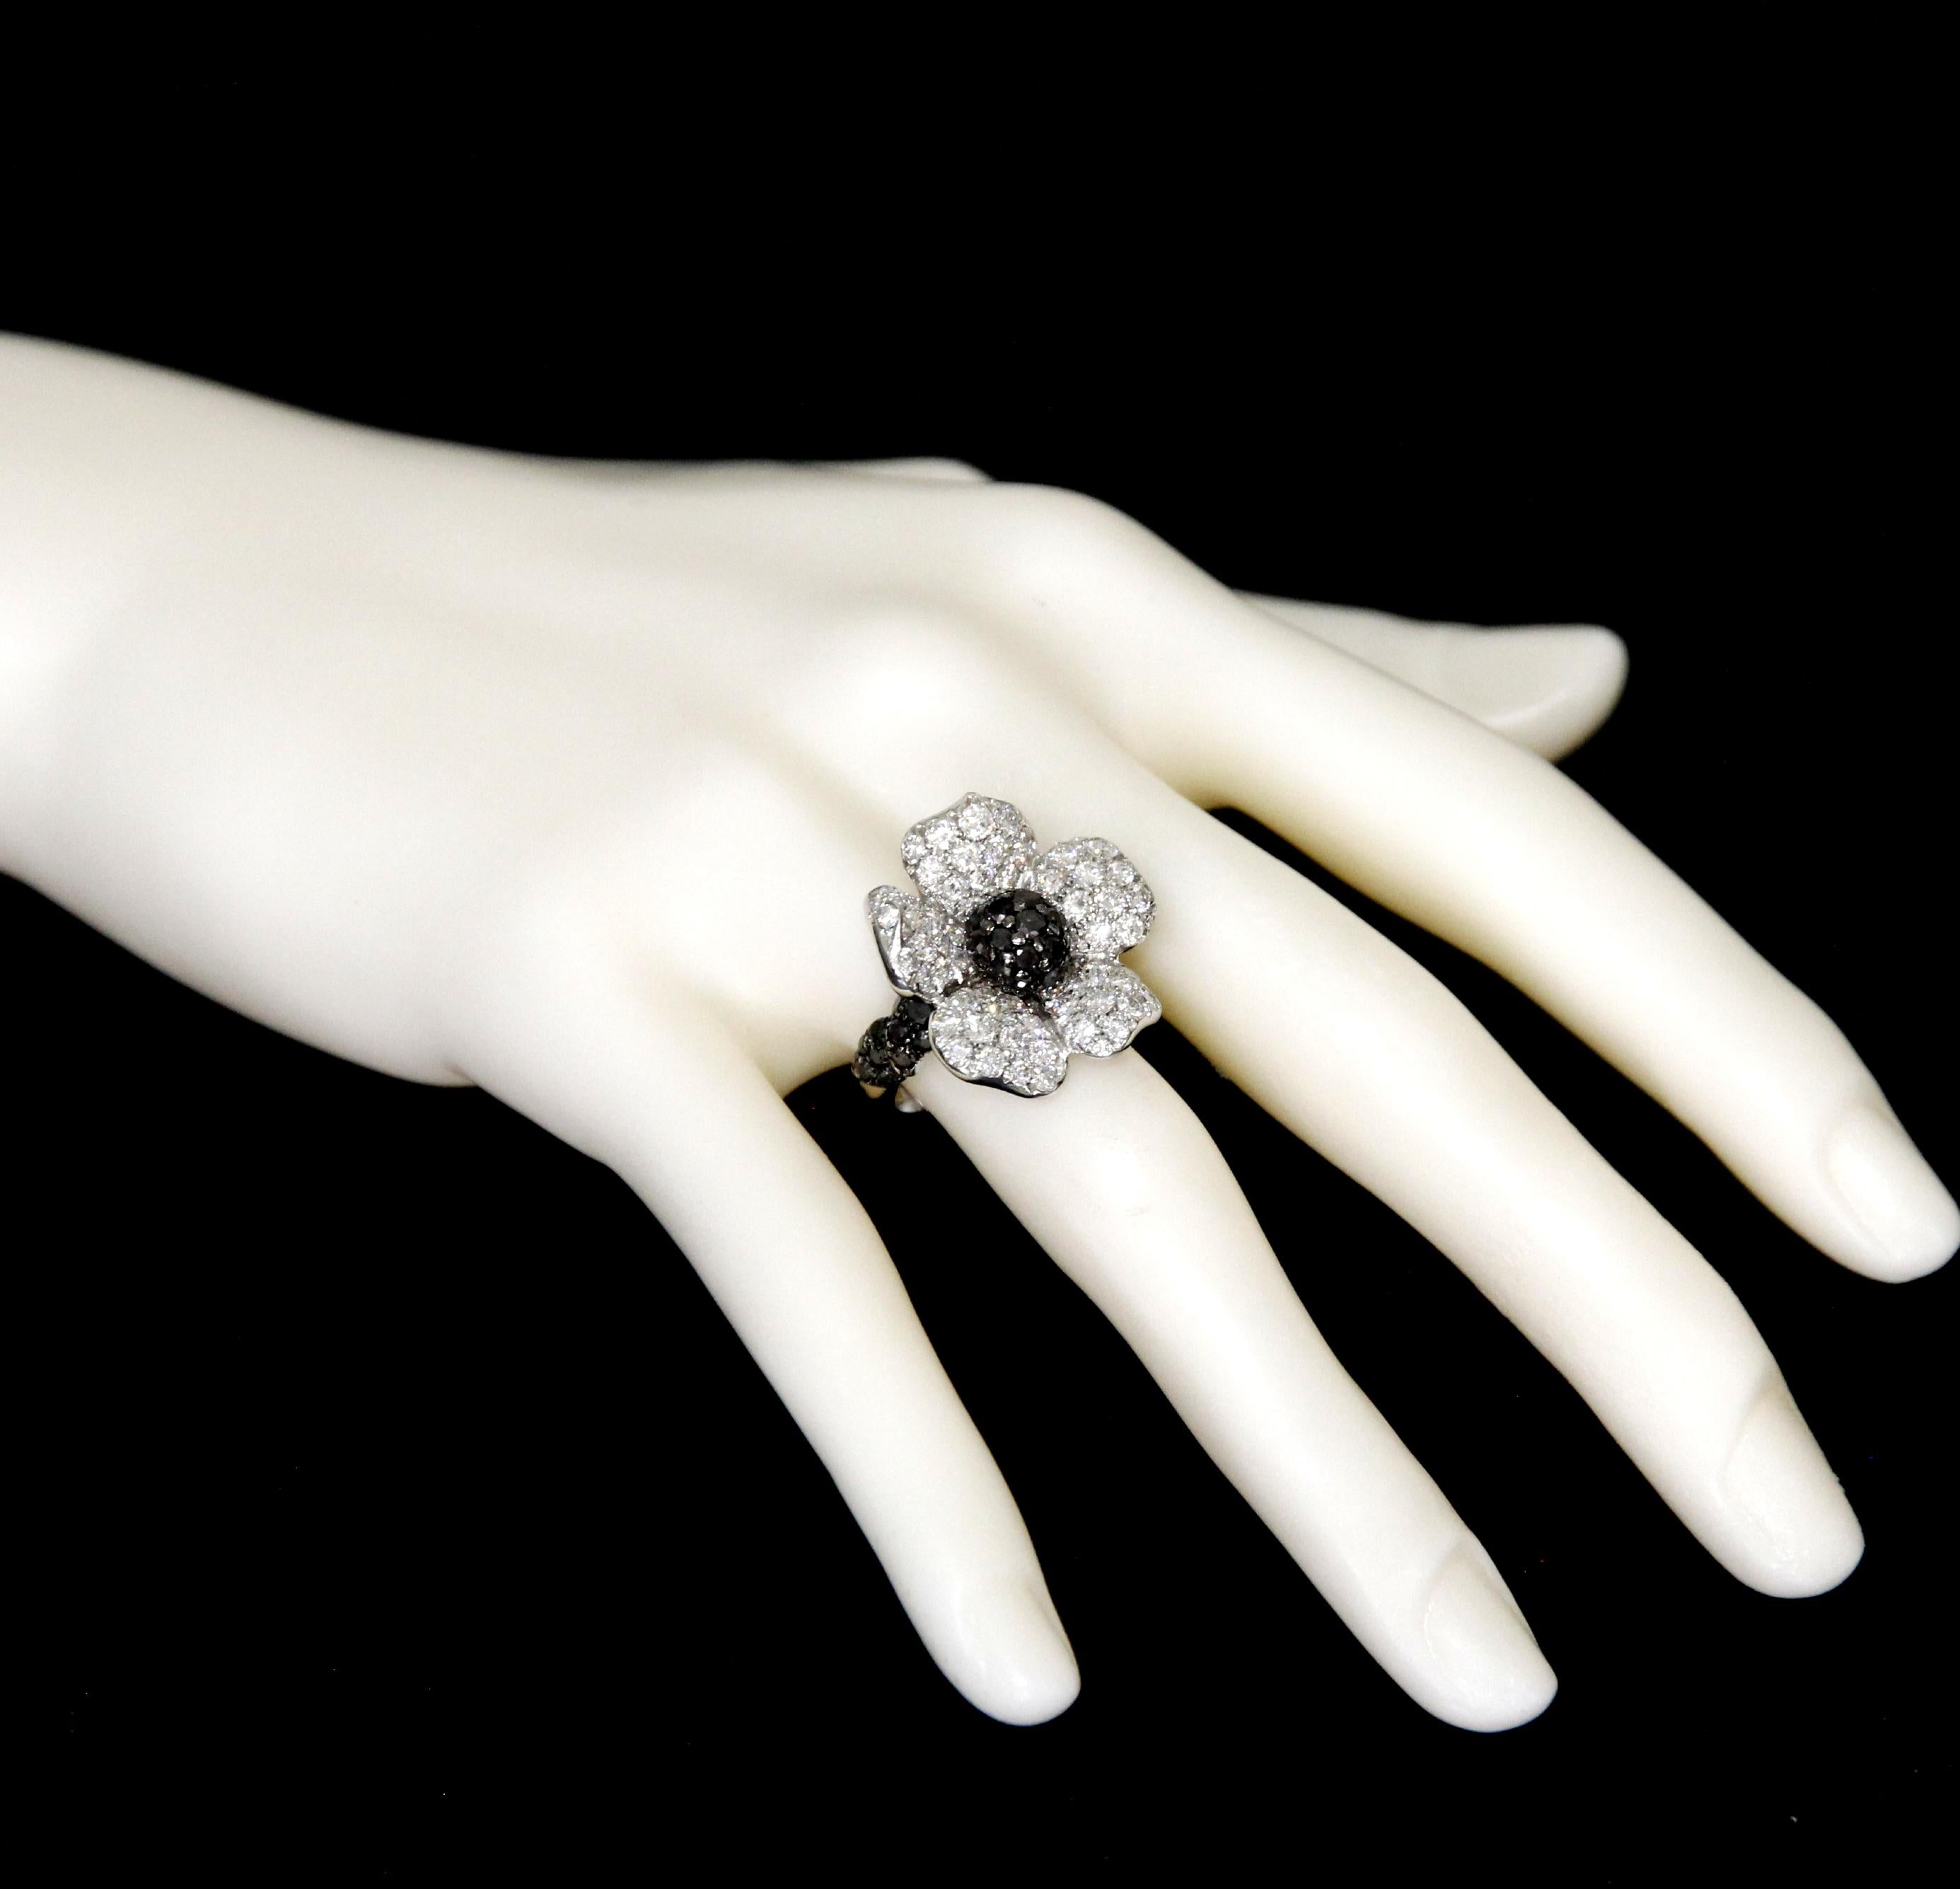 De Grissogono Diamond Ring 18K White Gold
Diamonds 4.92ctw
US Size 5.75
Retail $34,800.00